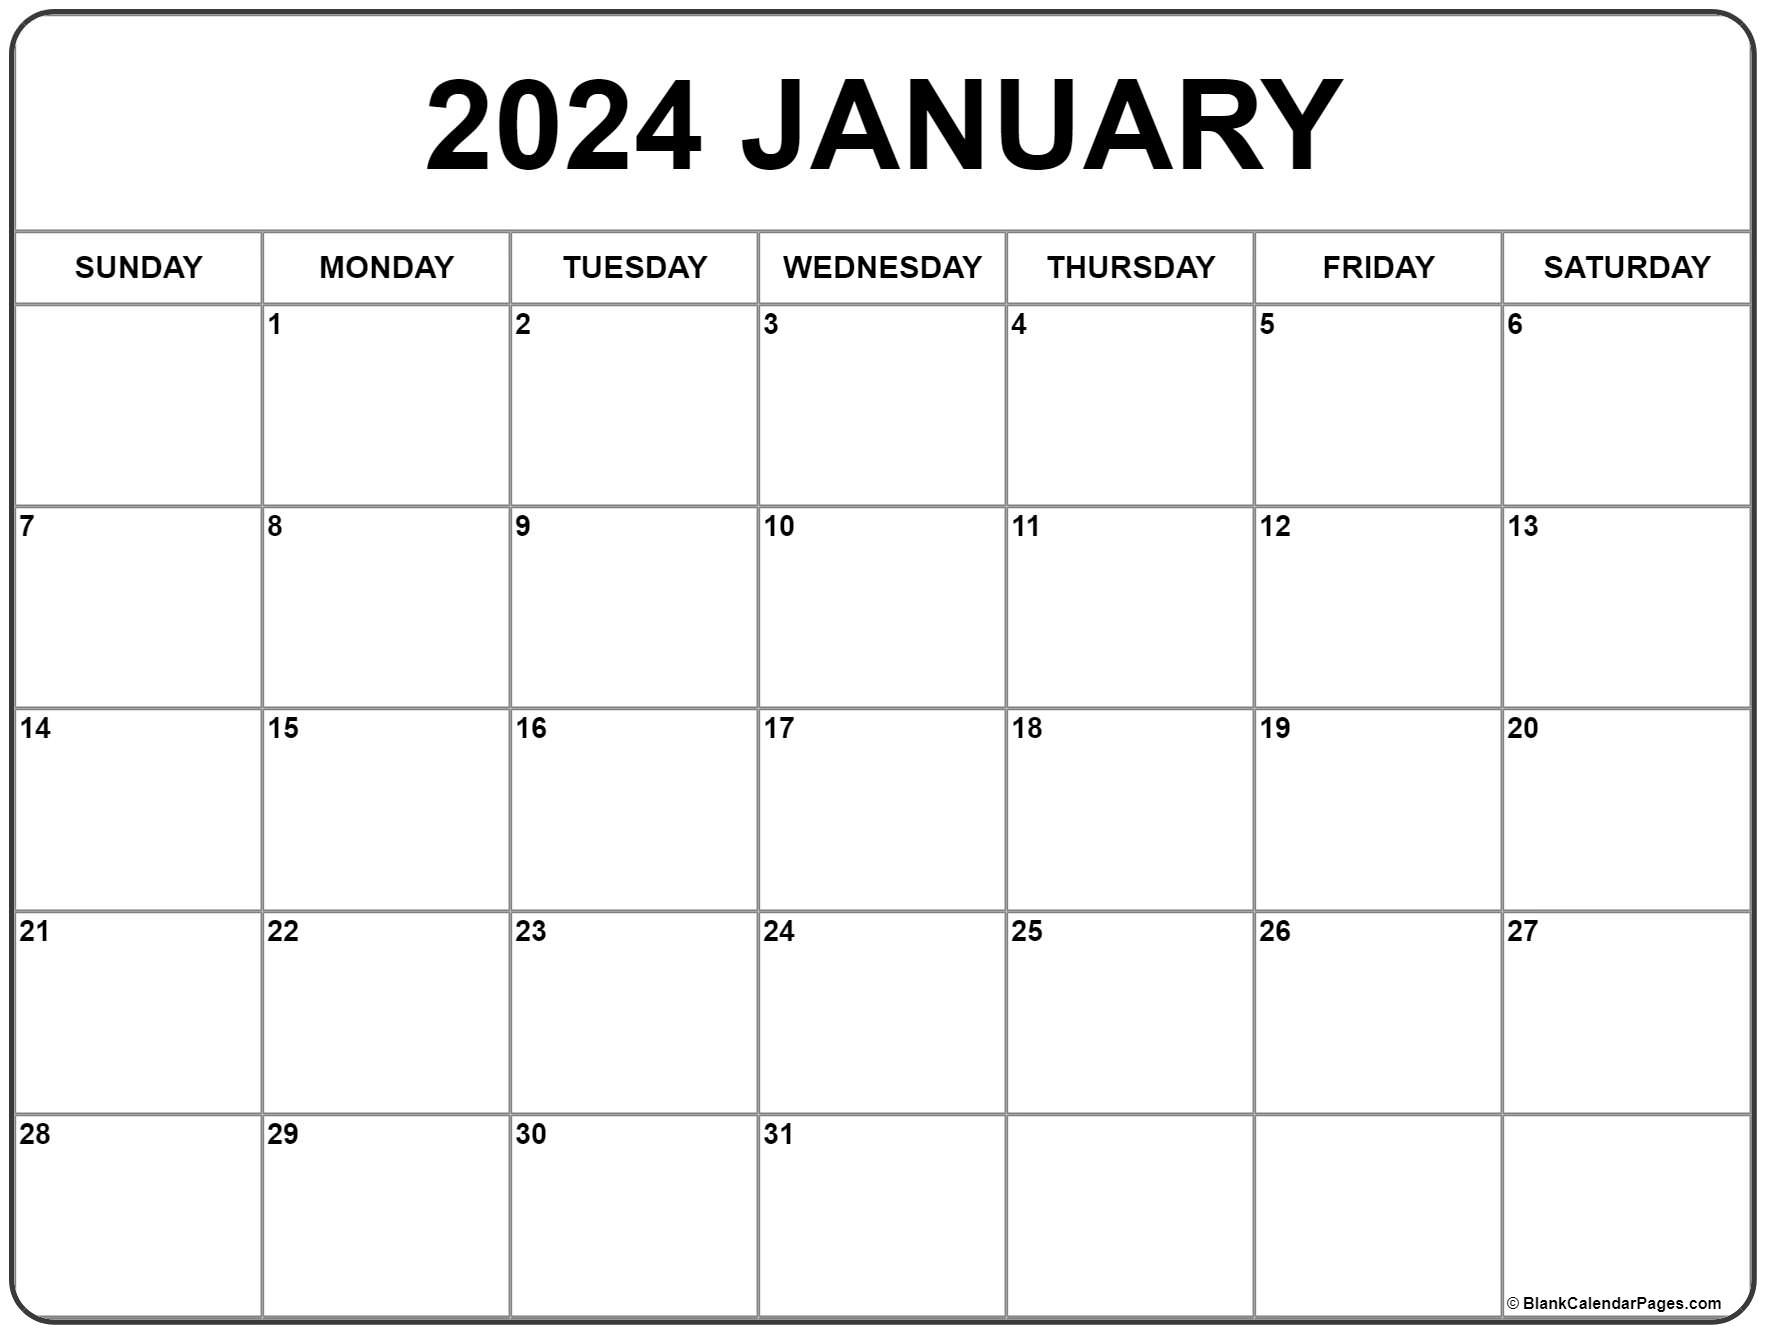 January 2024 Calendar | Free Printable Calendar for 2024 January Calendar Printable Free